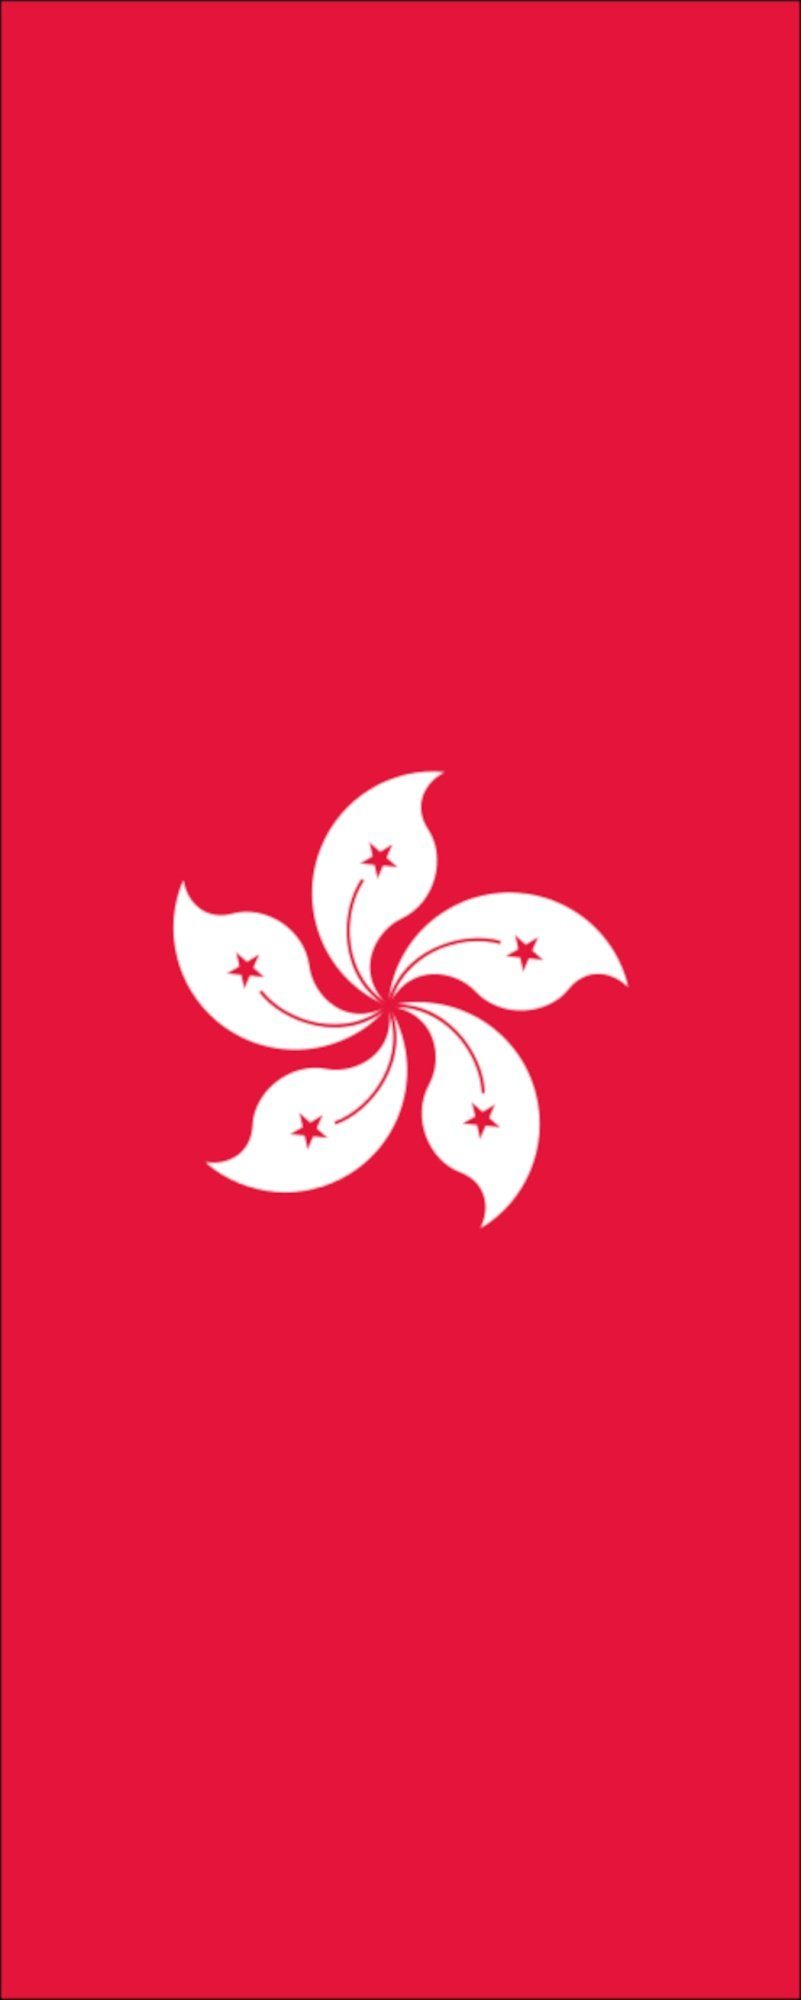 Hochformat Hongkong 160 flaggenmeer g/m² Flagge